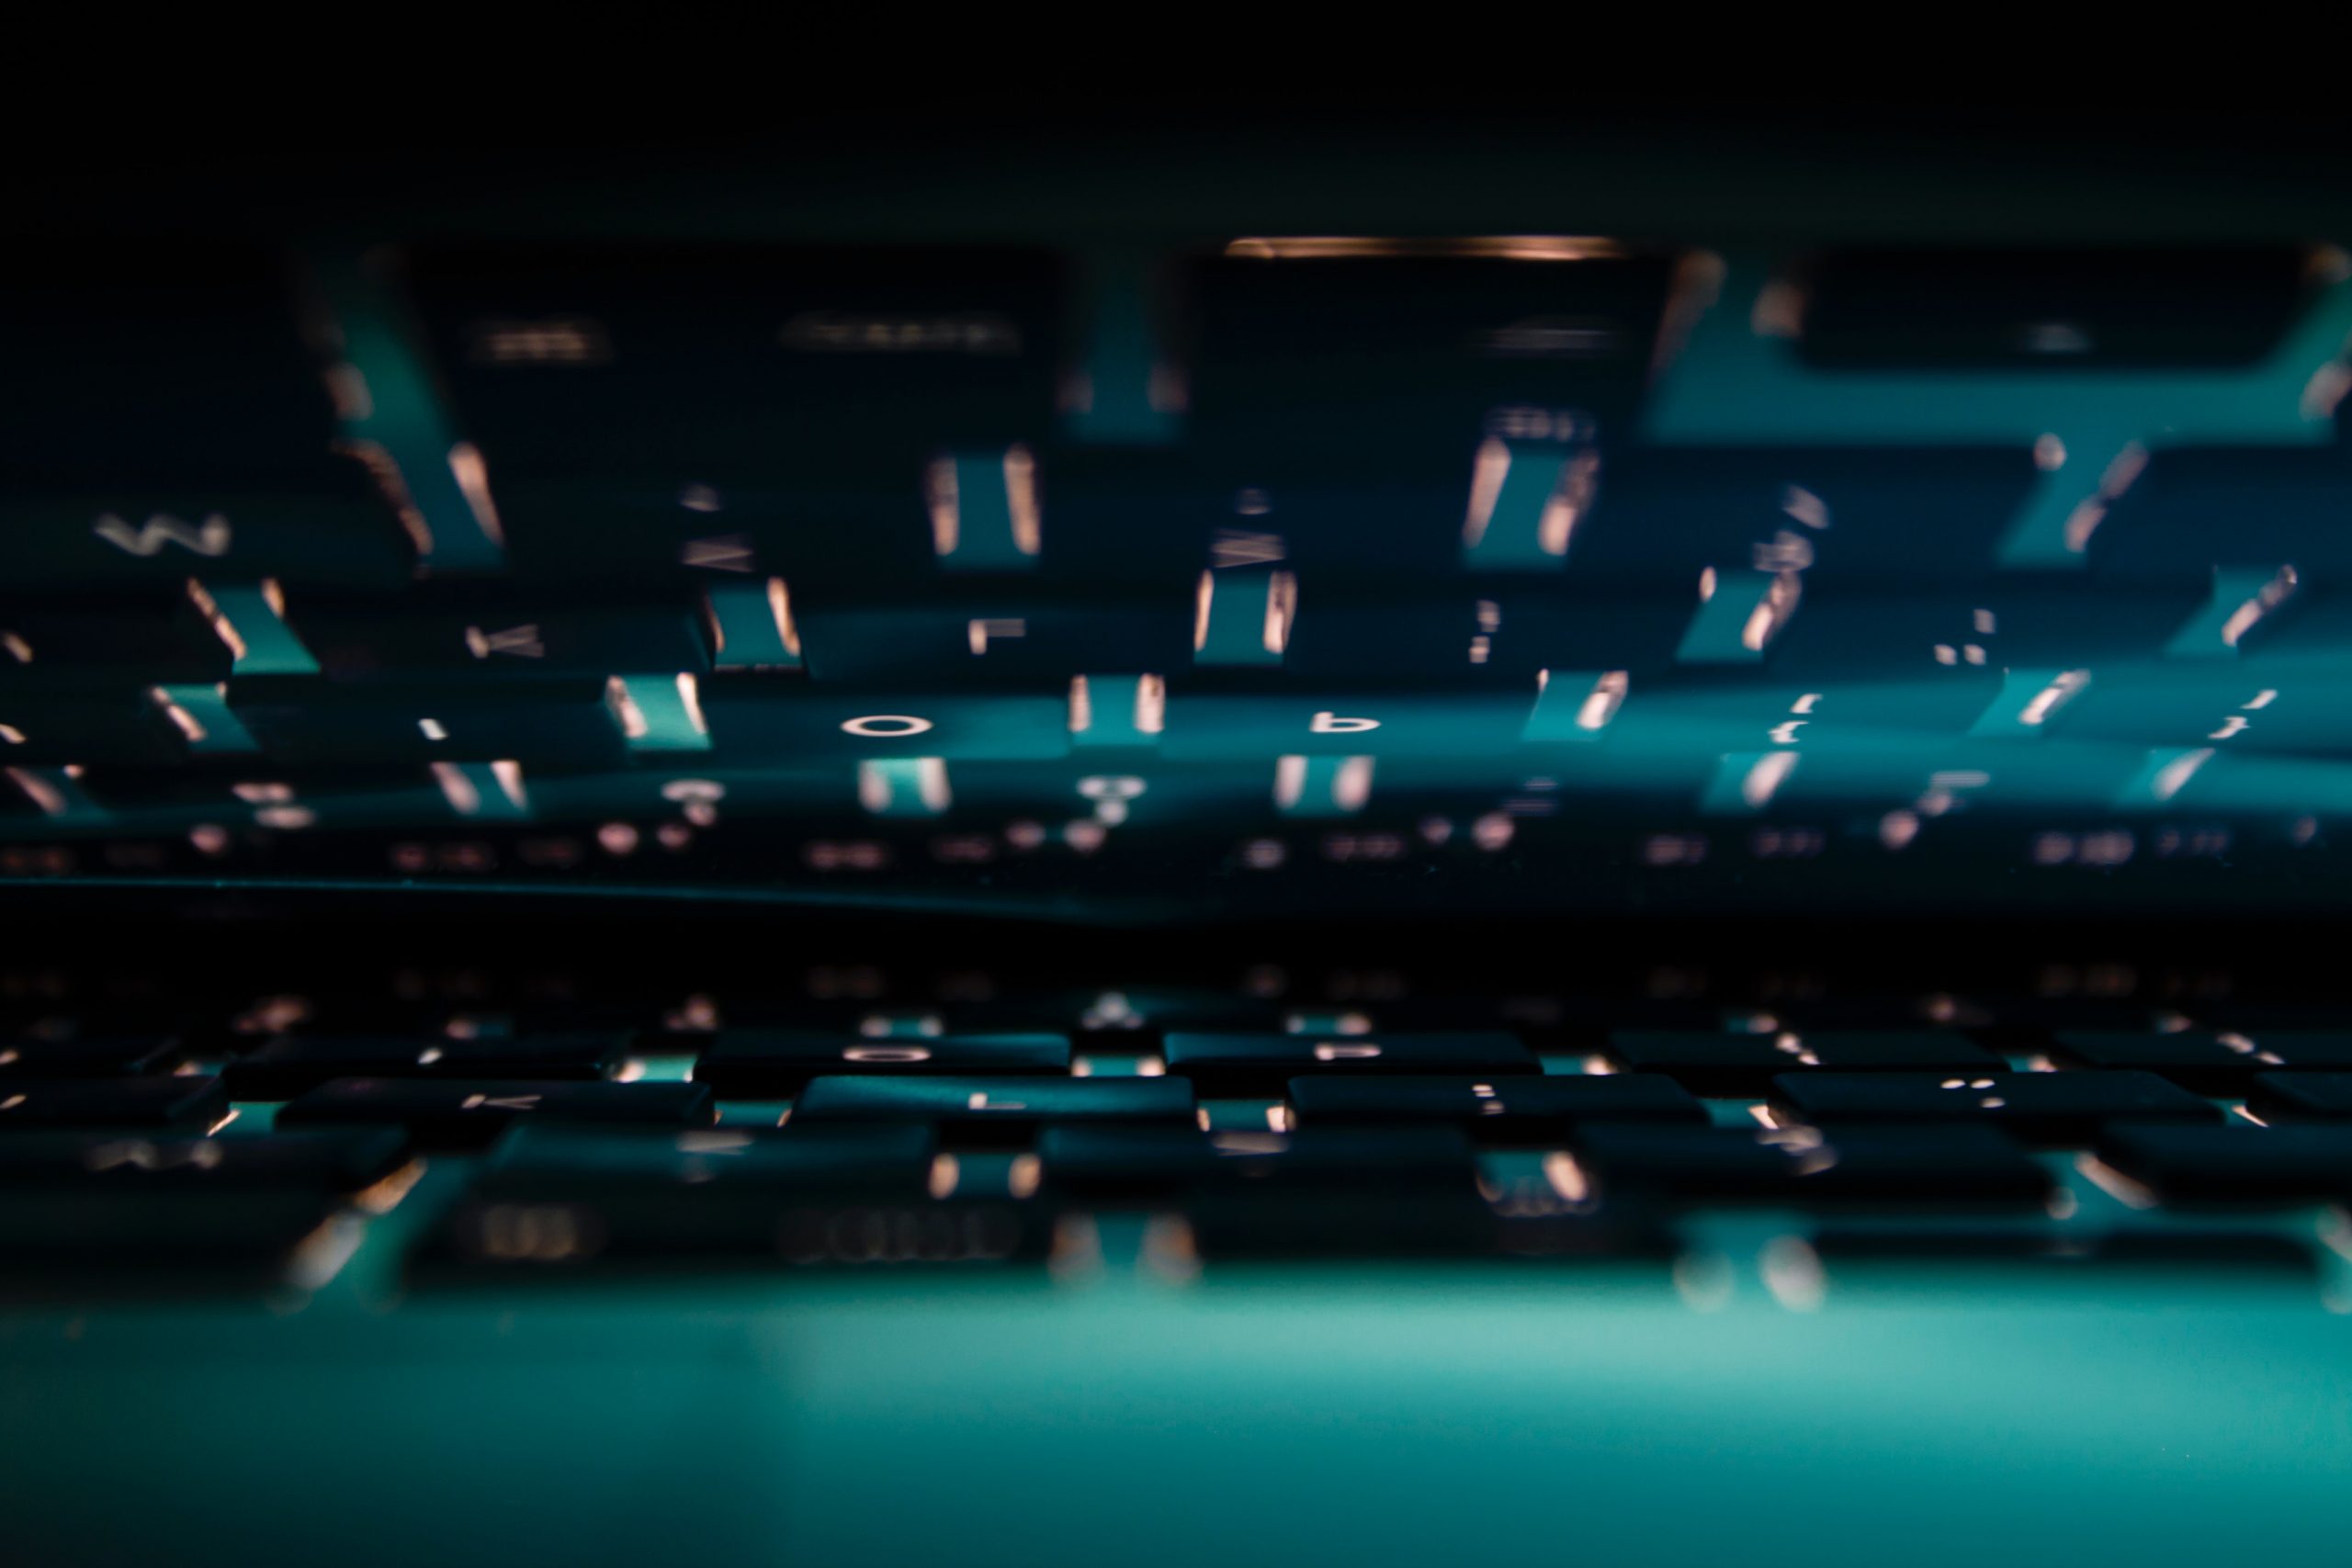 Photo of a backlit keyboard up close